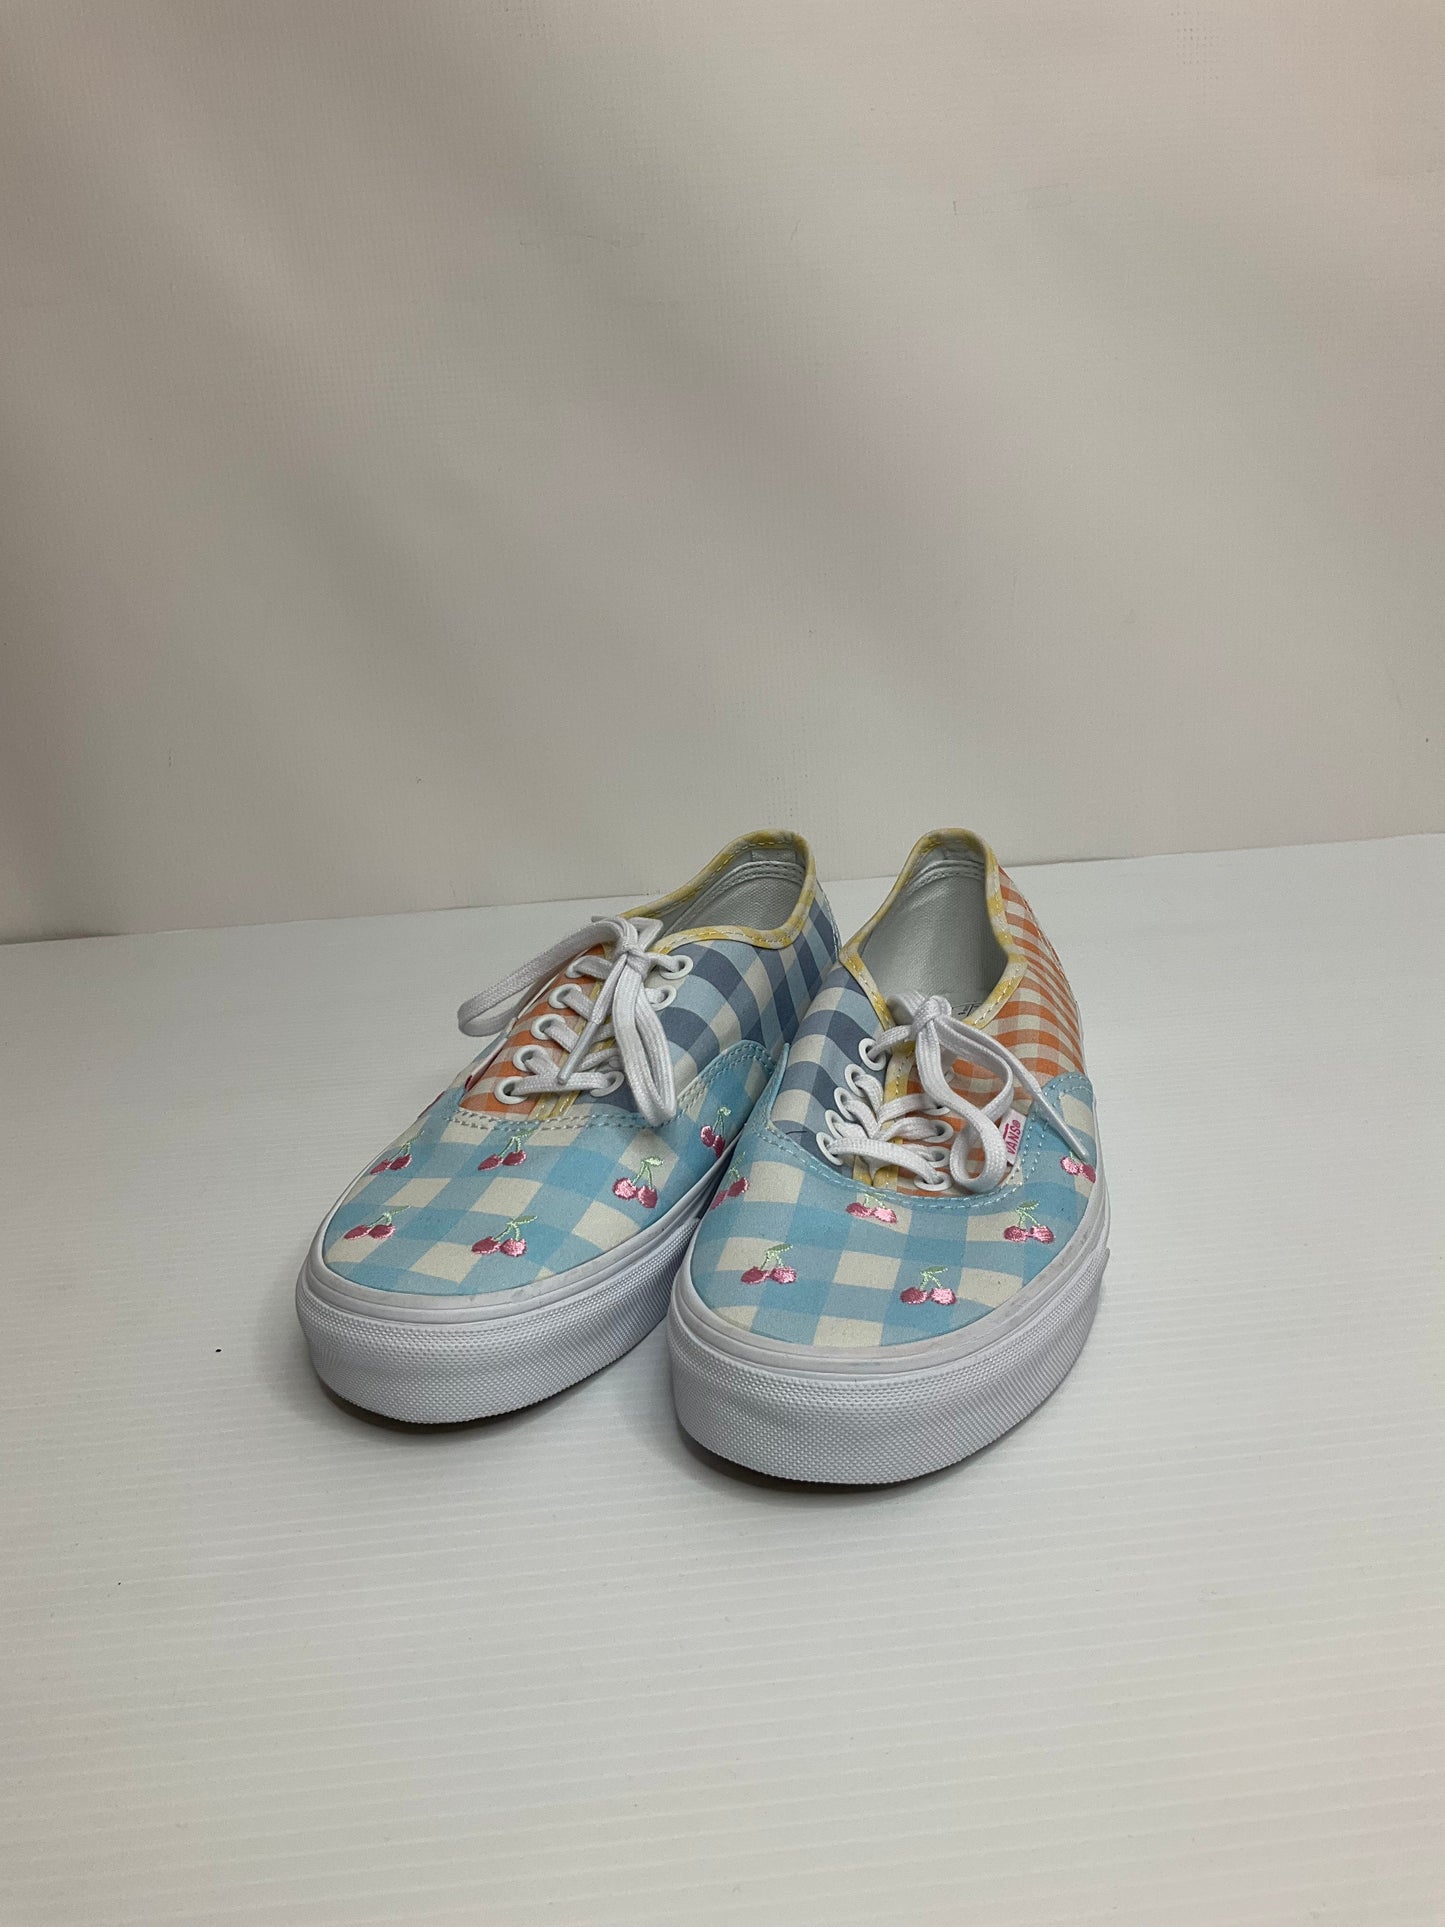 Plaid Pattern Shoes Sneakers Vans, Size 8